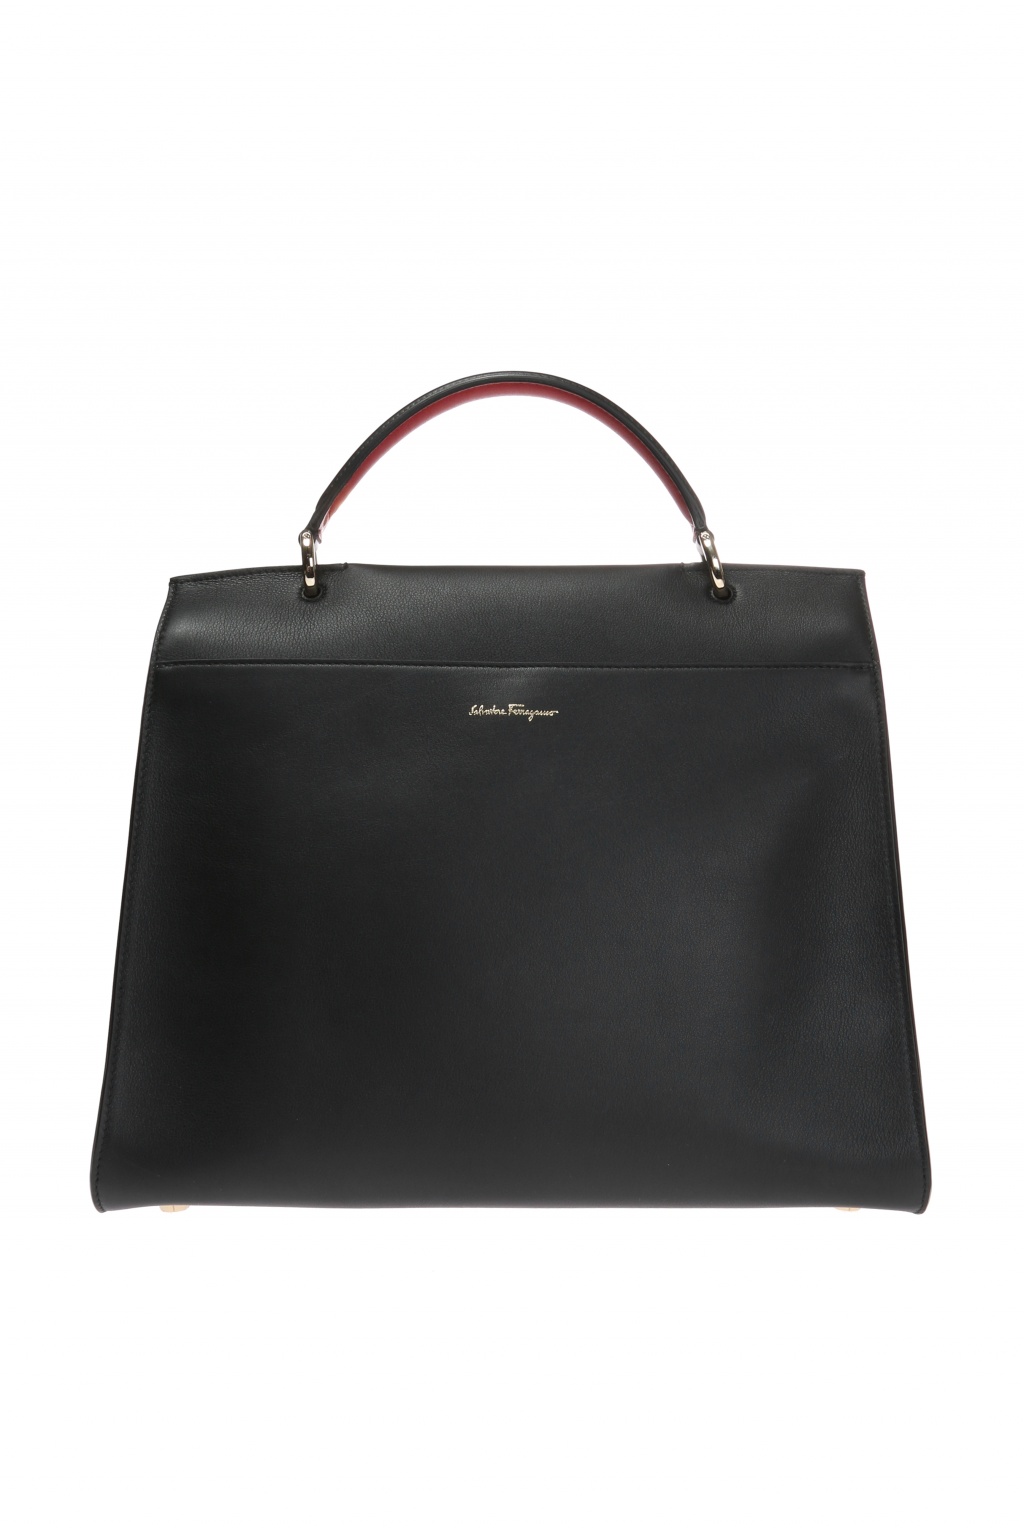 Salvatore Ferragamo 'Jet Set' shoulder bag | Women's Bags | Vitkac